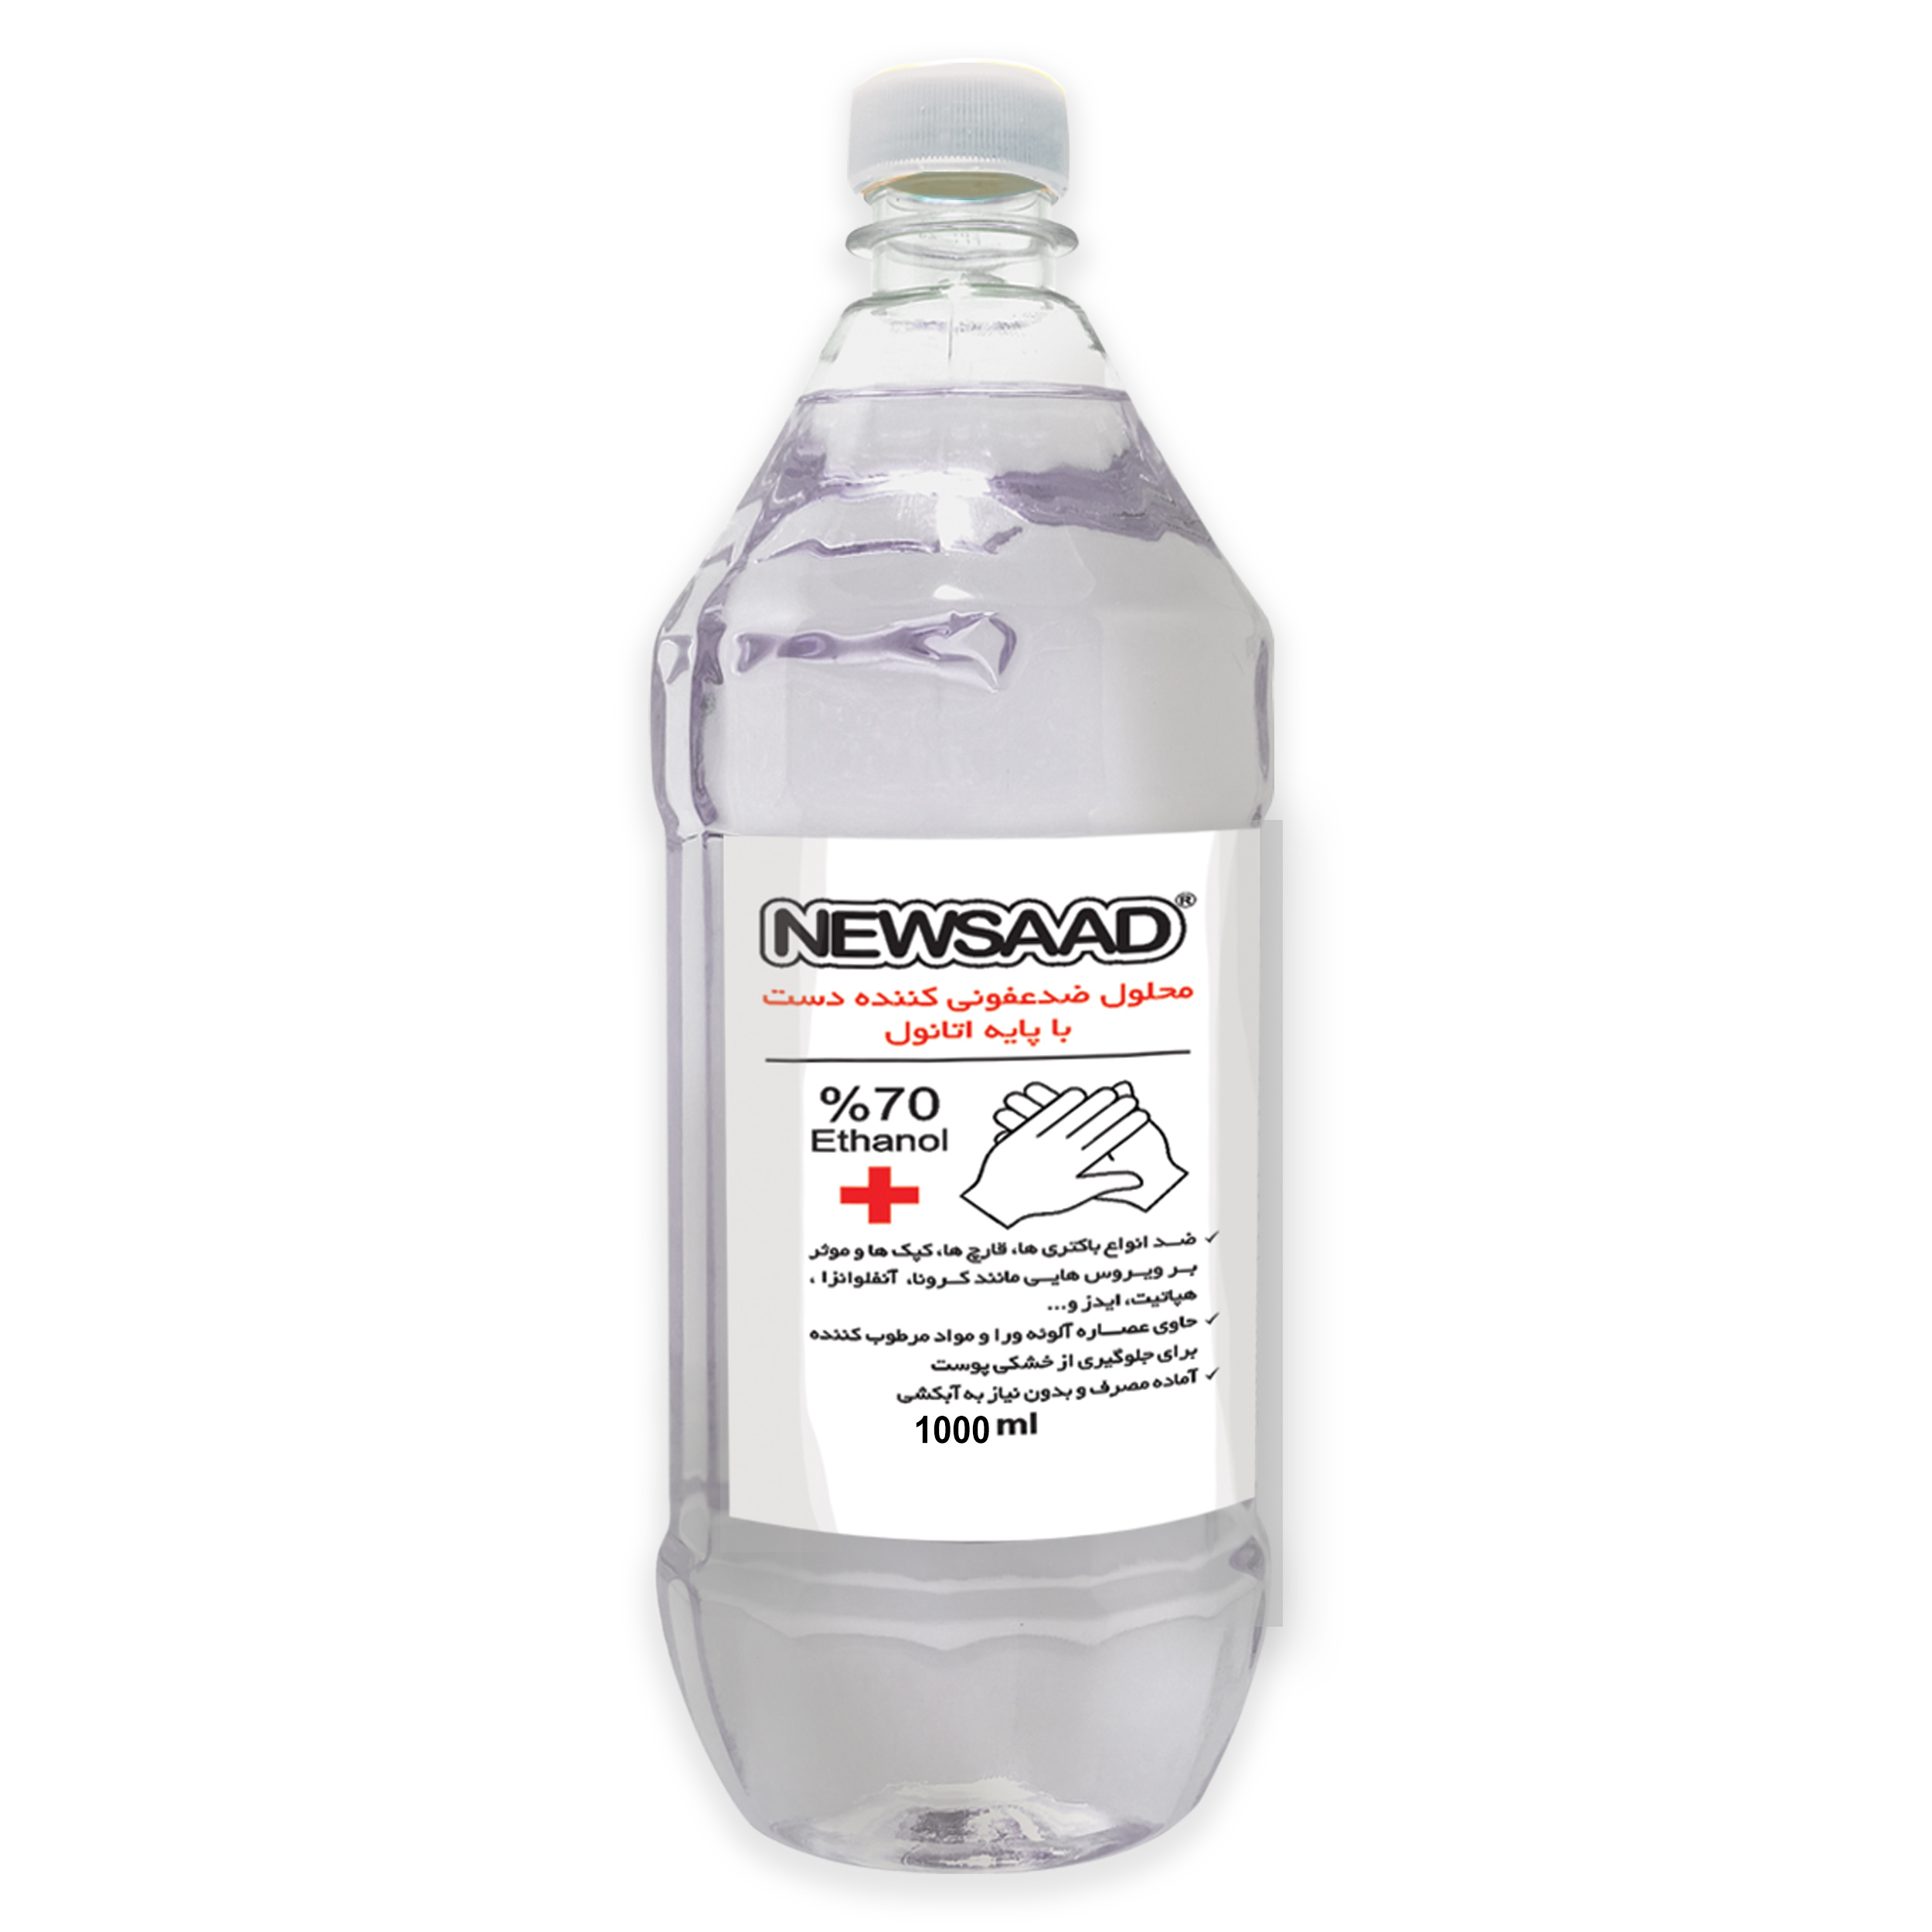 Alcoholic hand sanitizer solution containing 70% ethanol, NewSad, volume one liter